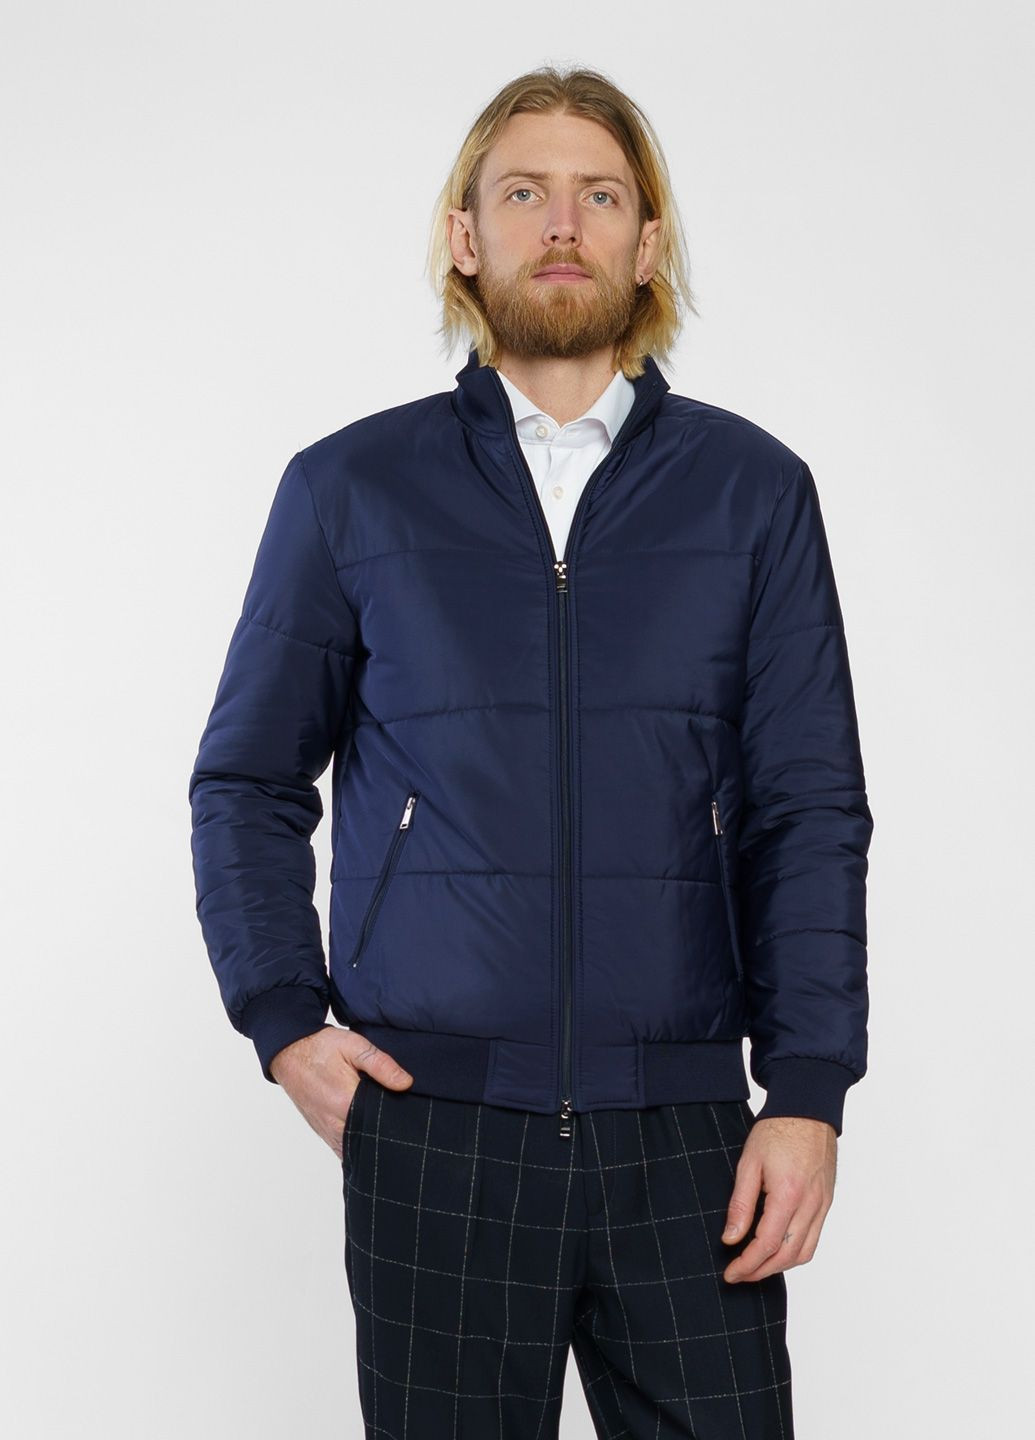 Синяя зимняя куртка мужская синяя Arber Varsity Jacket H19